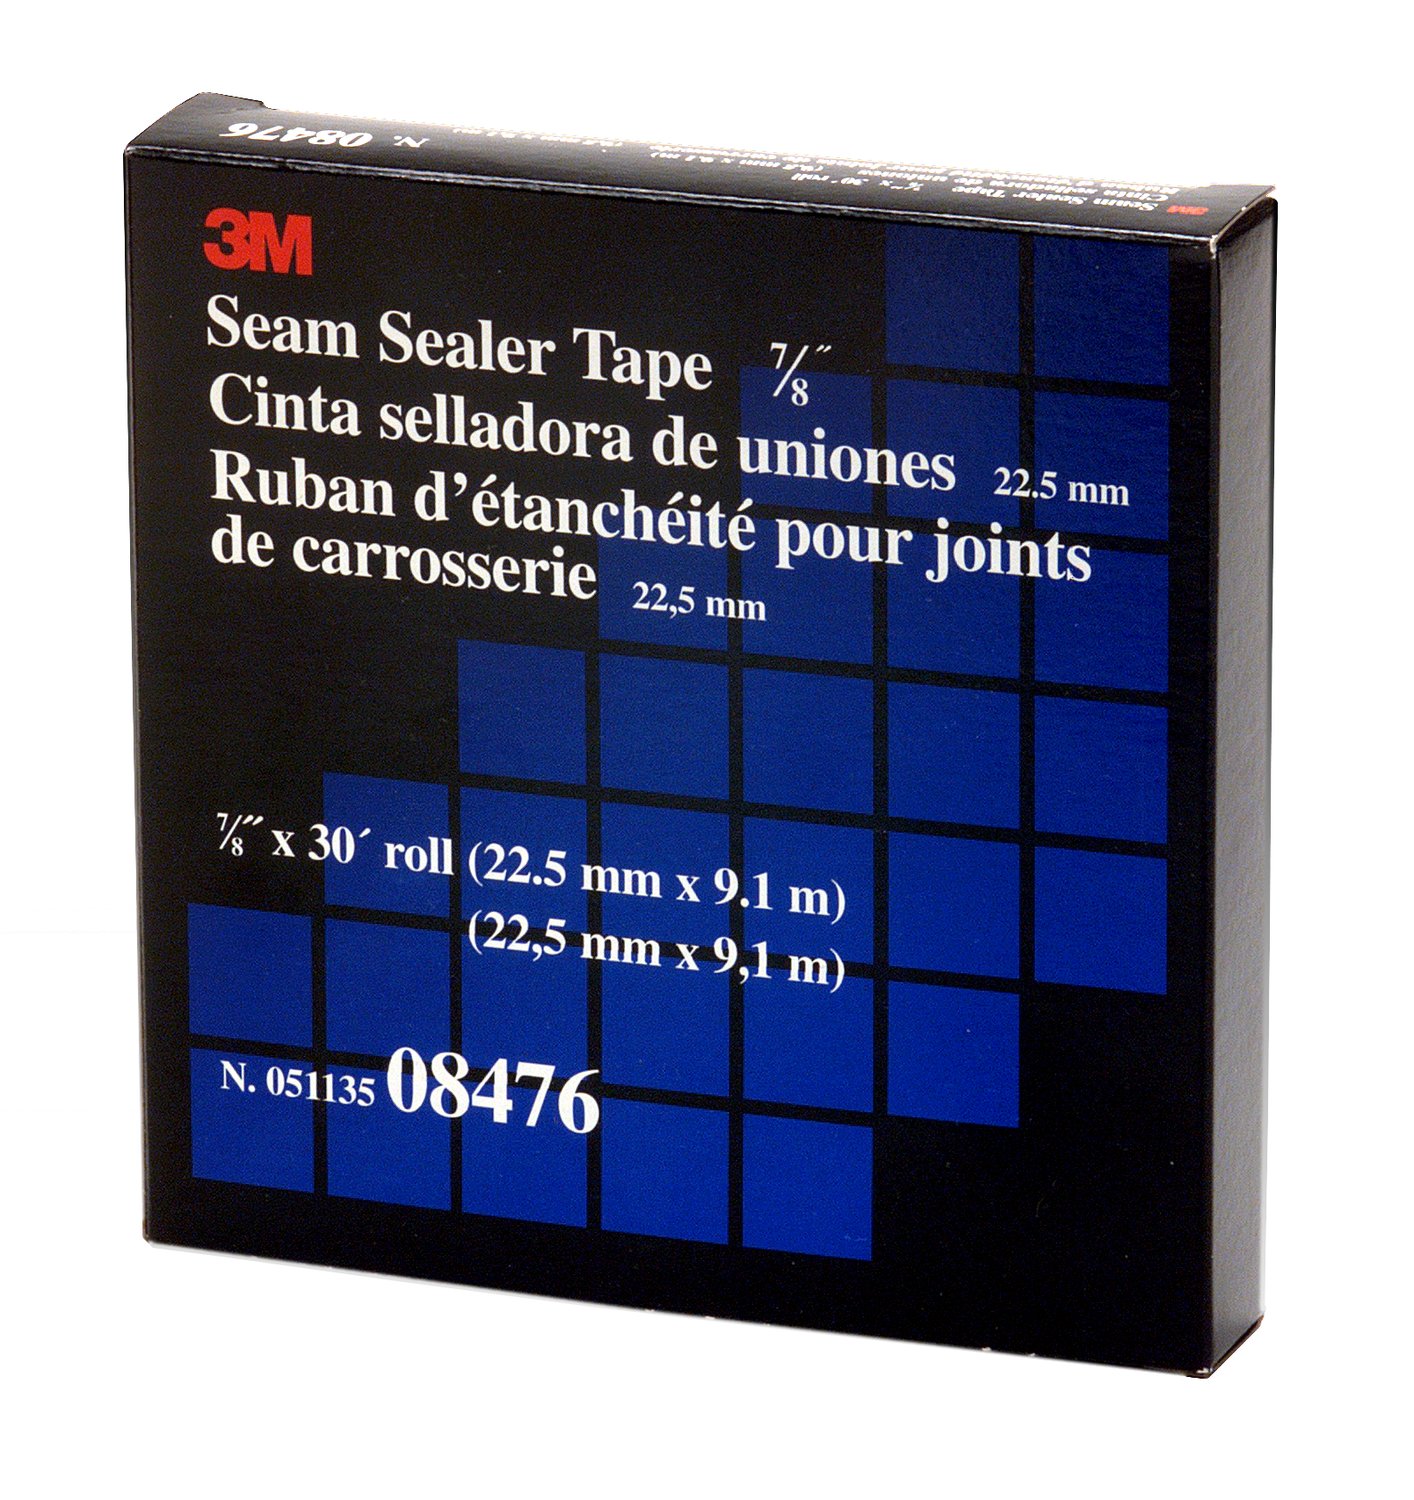 7000028970 - 3M Seam Sealer Tape, 08476, 7/8 in x 30 ft, 12 per case